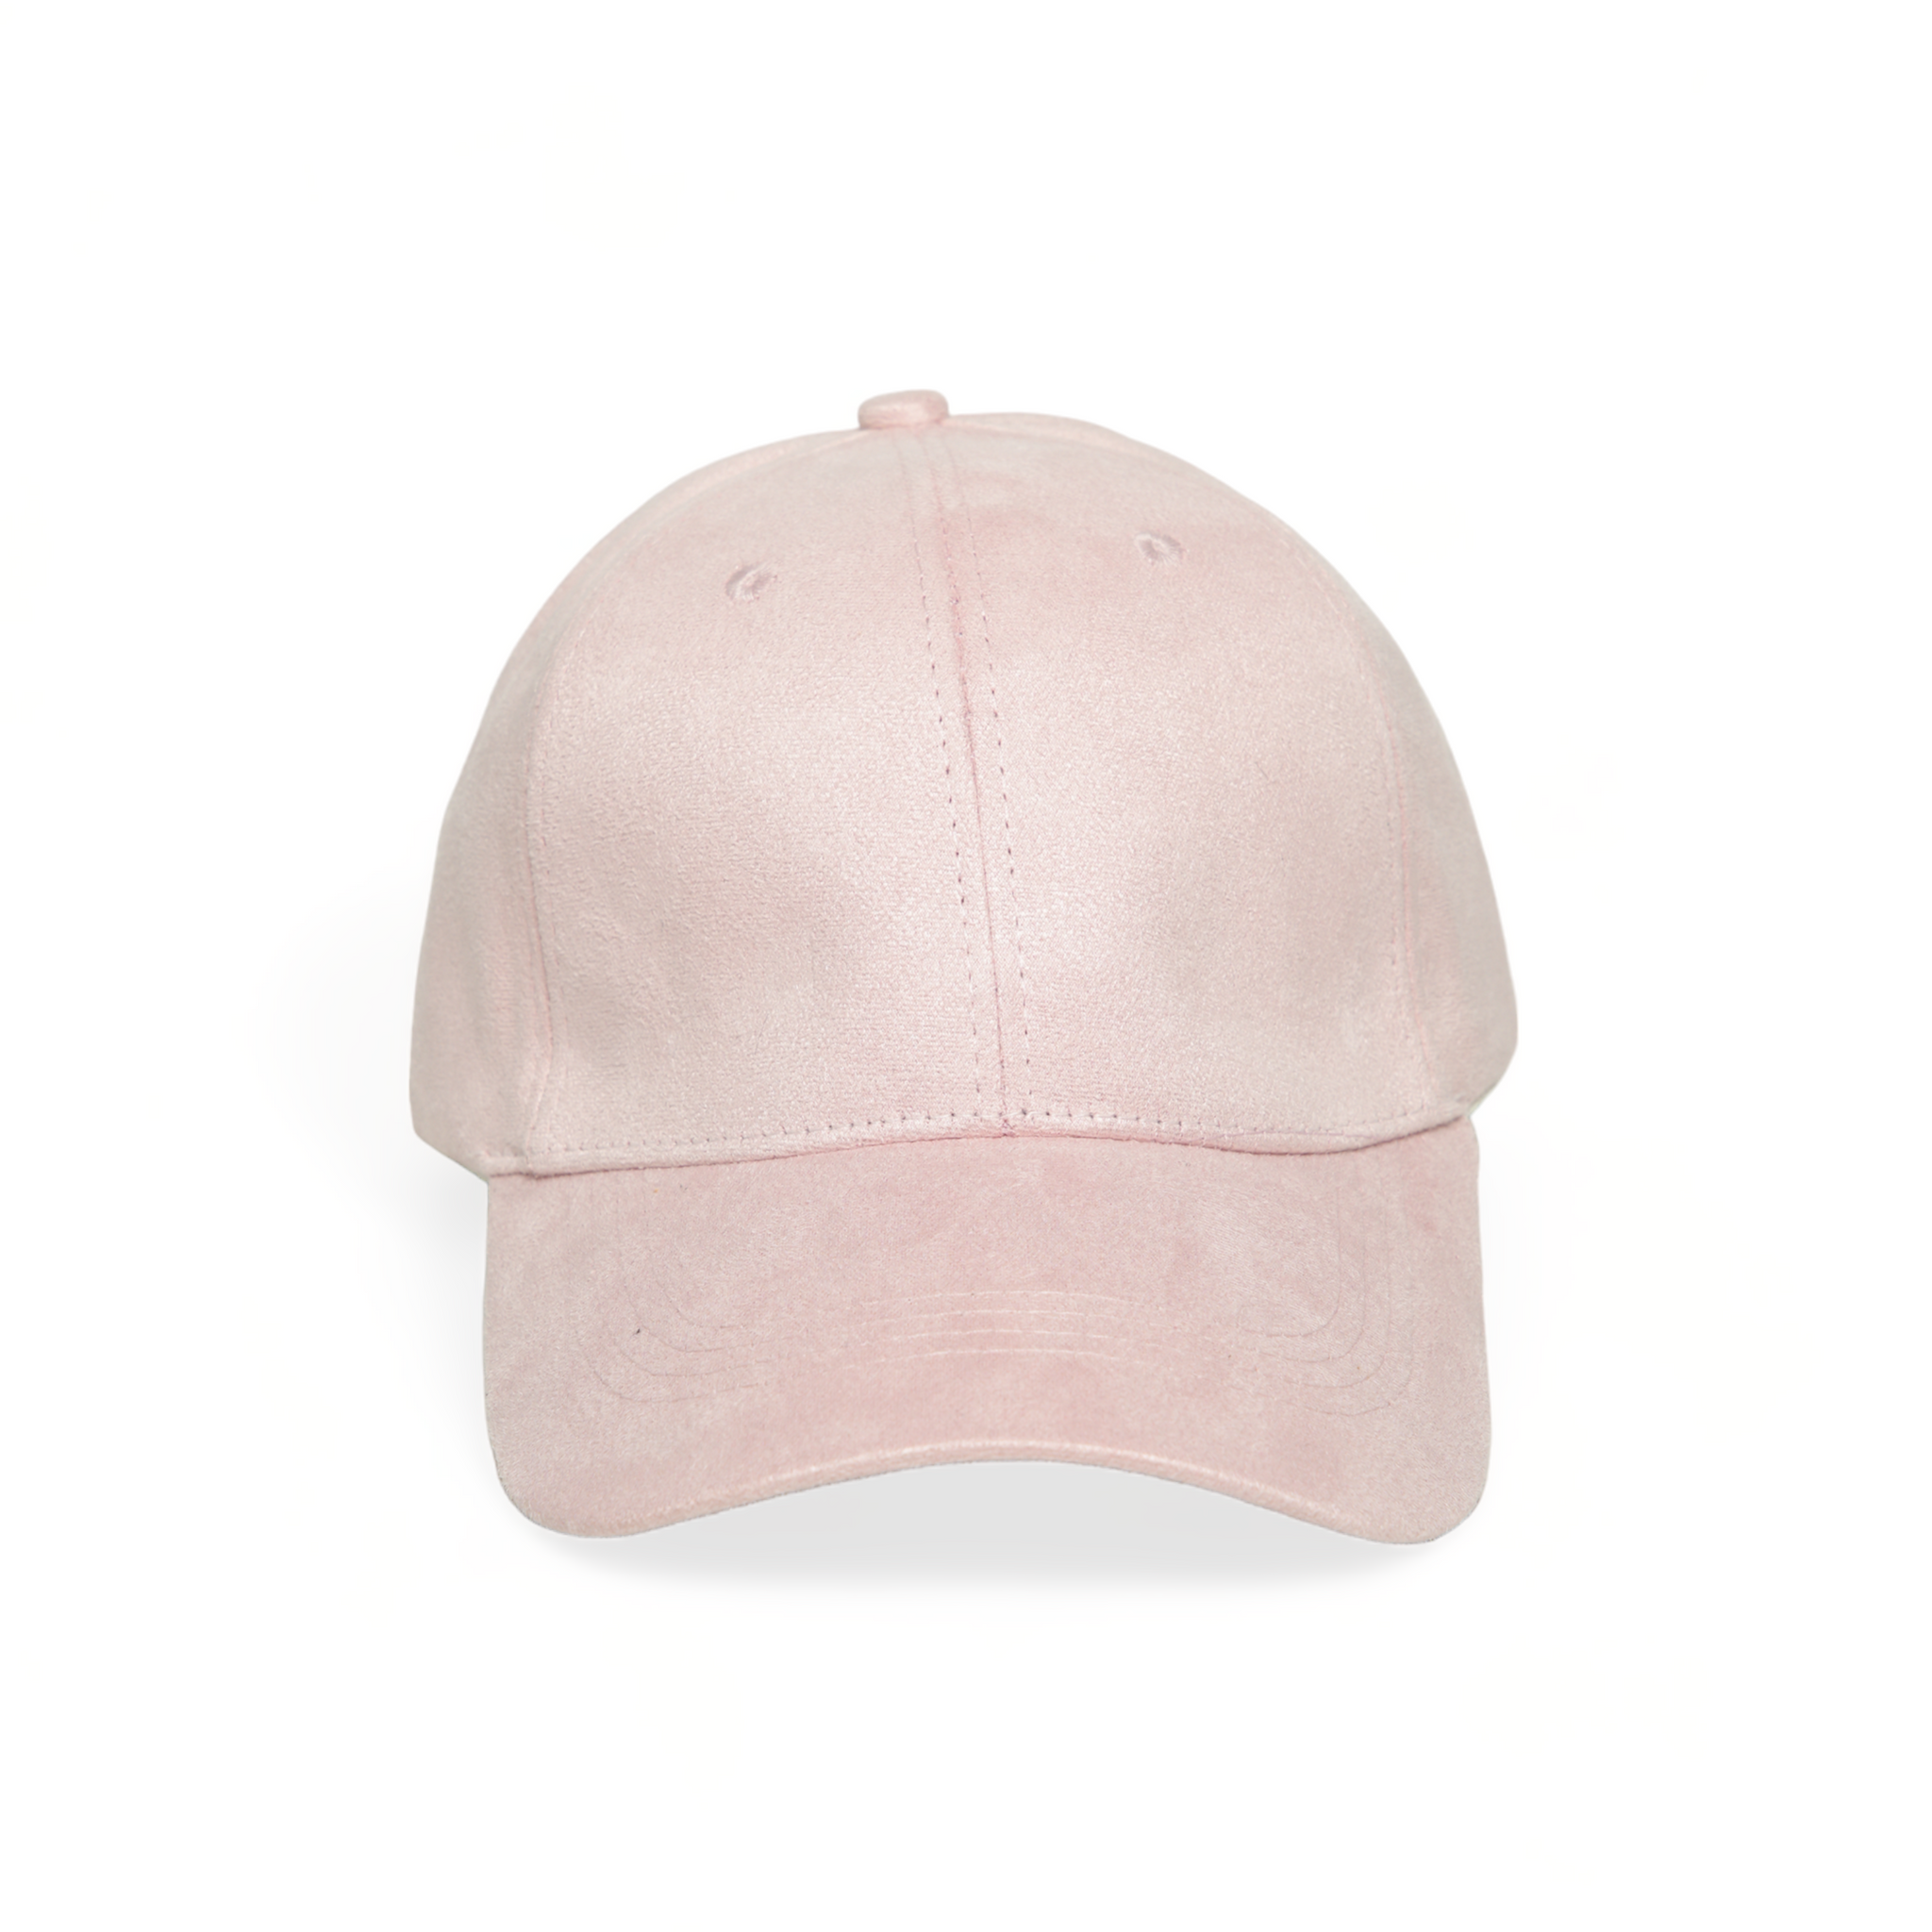 Chokore Structured Suede Baseball Cap (Pink)